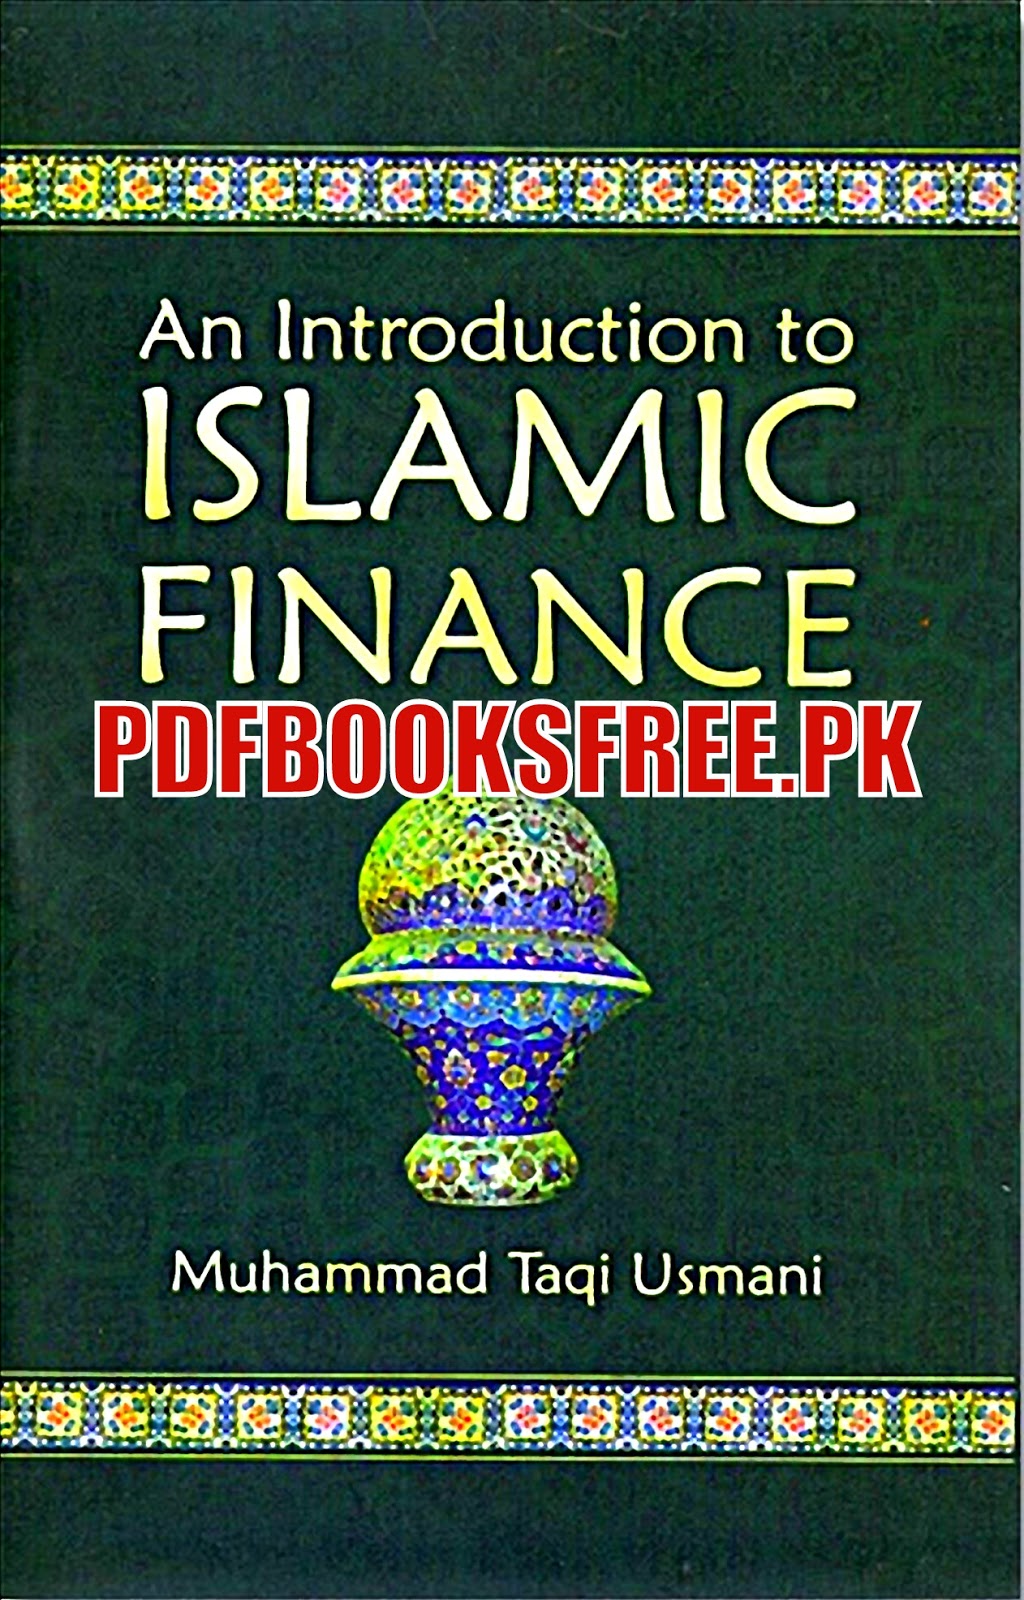 An Introduction to Islamic Finance By Mufti Muhammad Taqi Usmani - Free